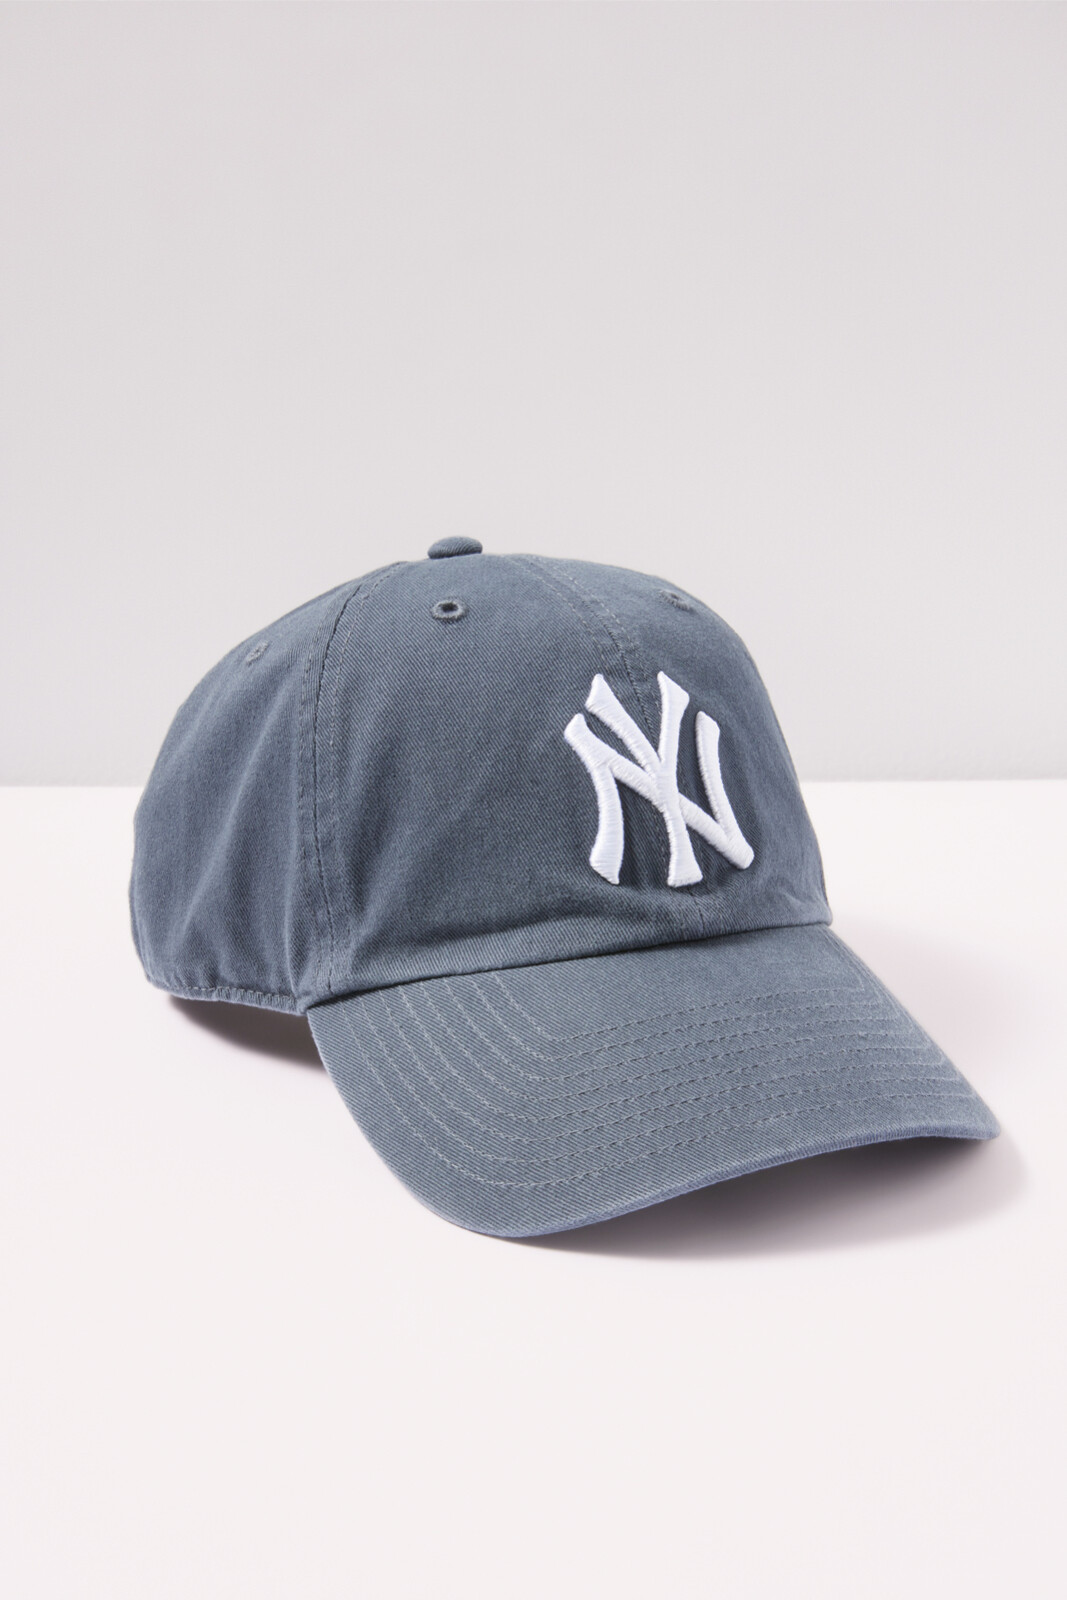 NY Baseball Hat - Washed Navy